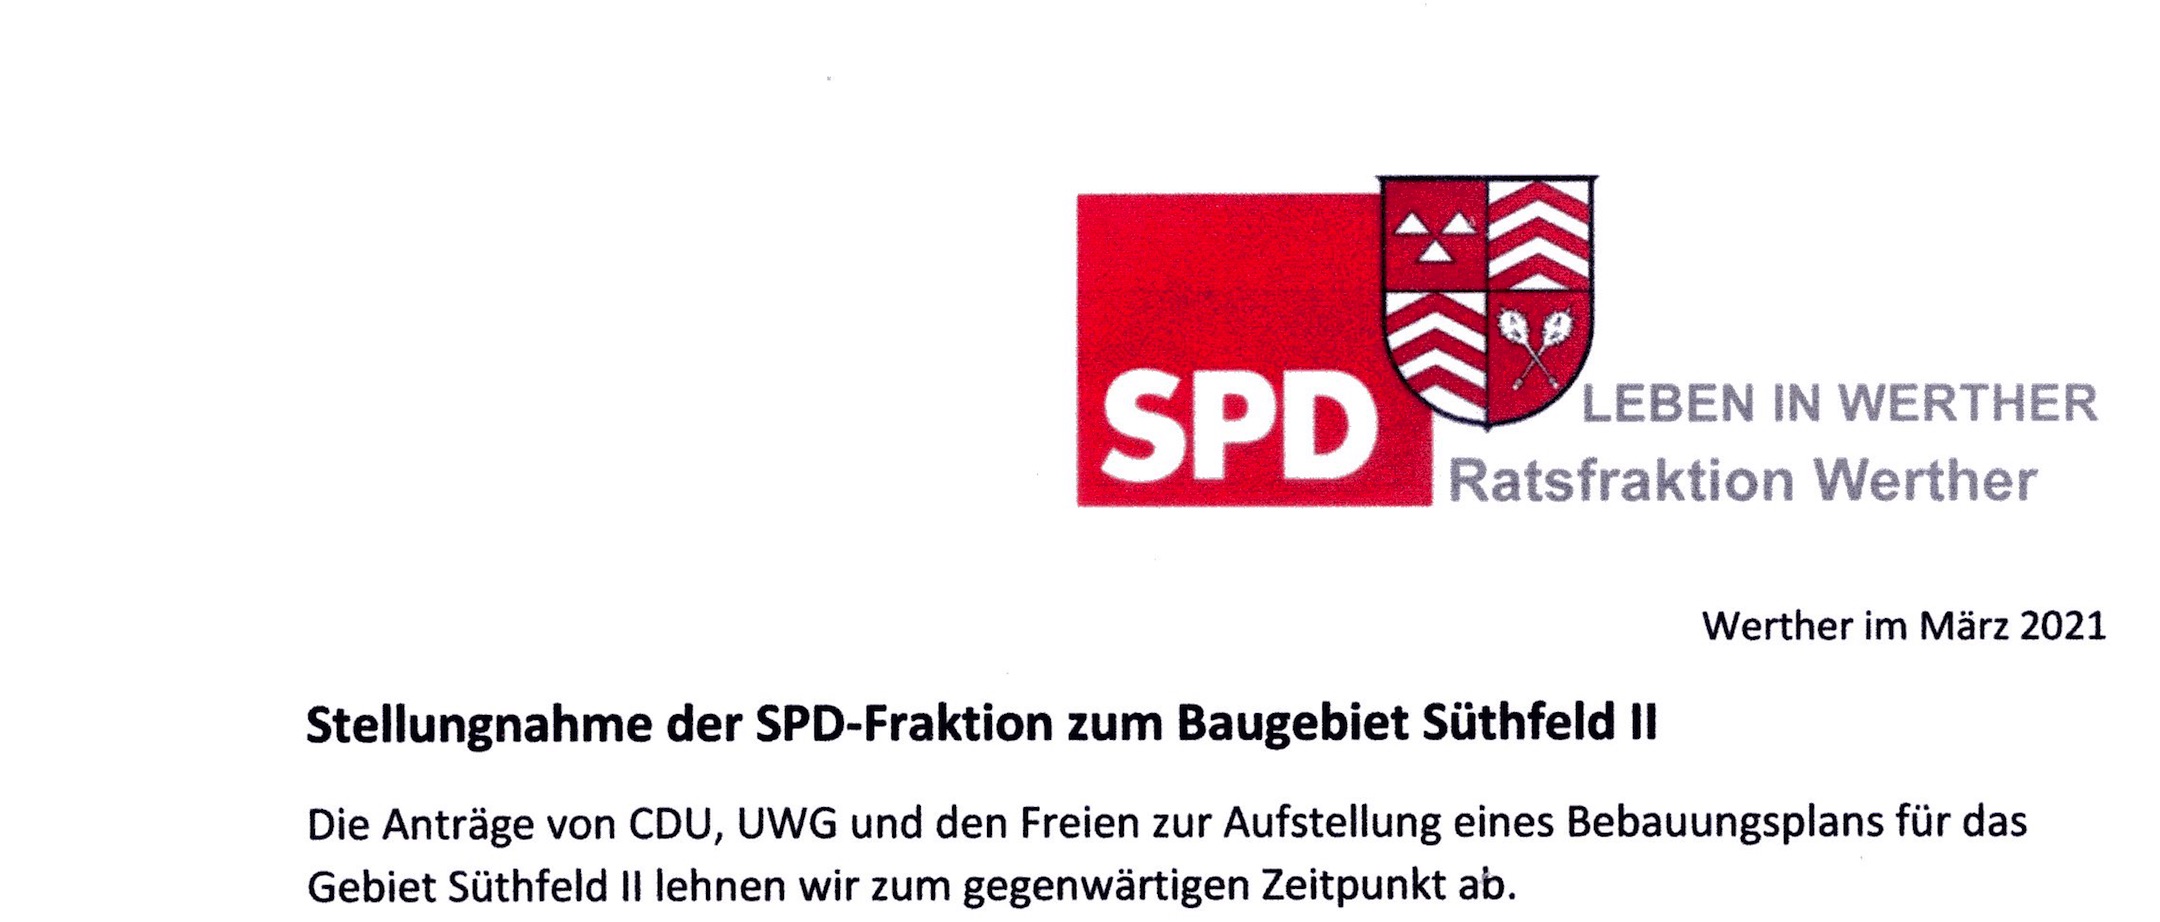 SPD 18.03.21.jpg